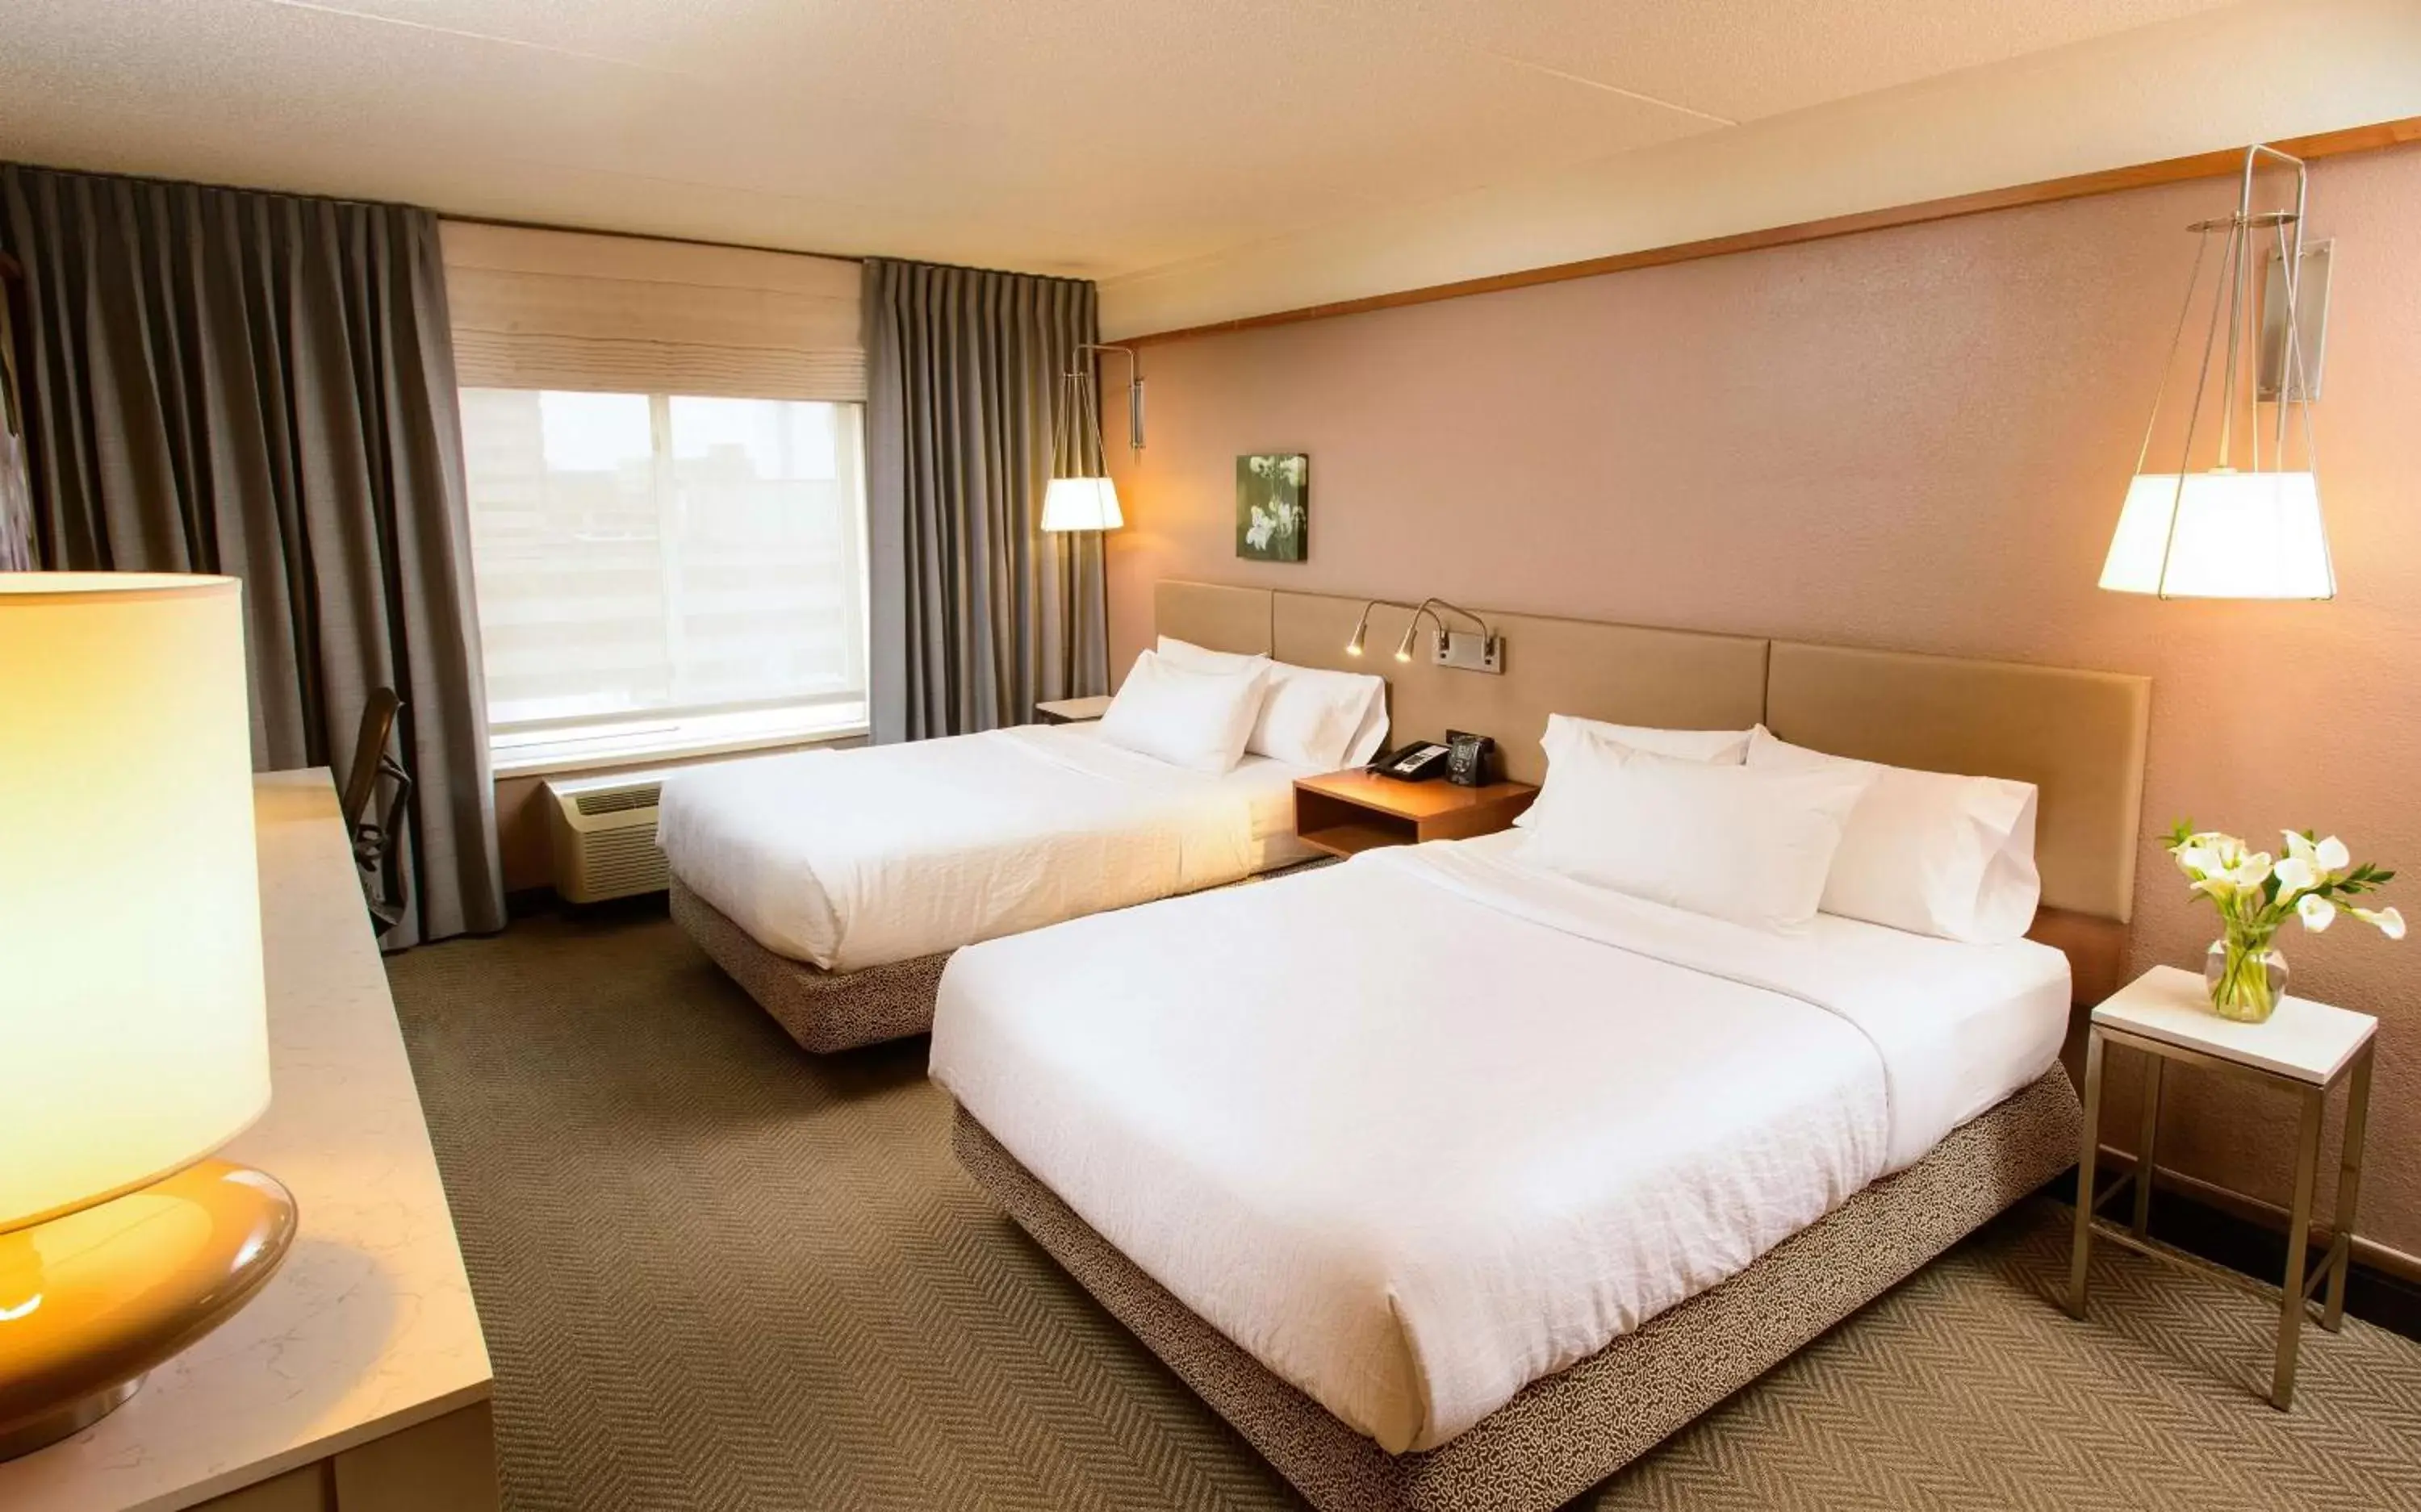 Premium Queen Room with Two Queen Beds in Hilton Garden Inn Rochester Downtown